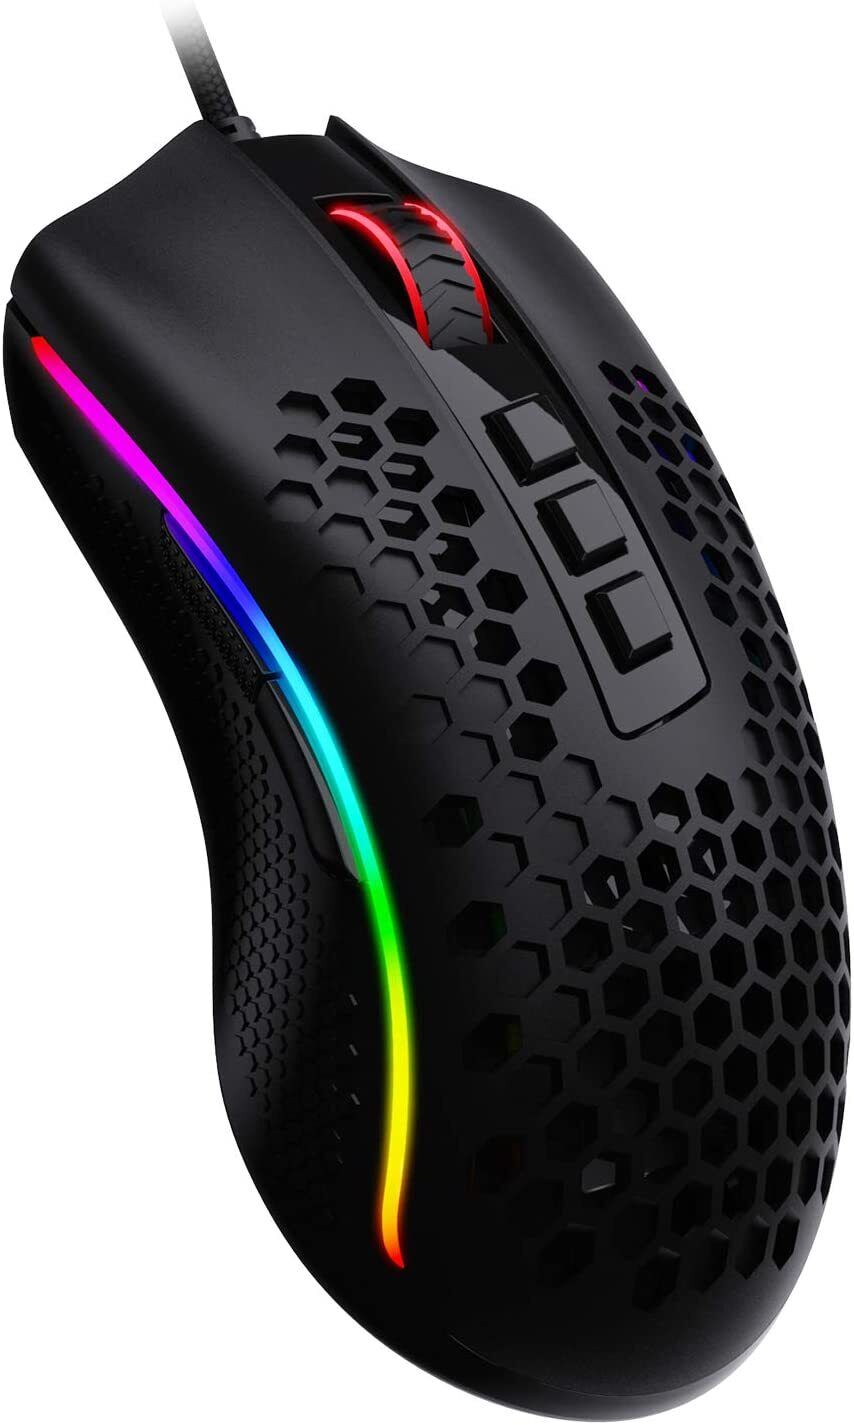 Redragon M808 Storm Lightweight RGB Gaming Mouse, Ultralight Honeycomb Shell